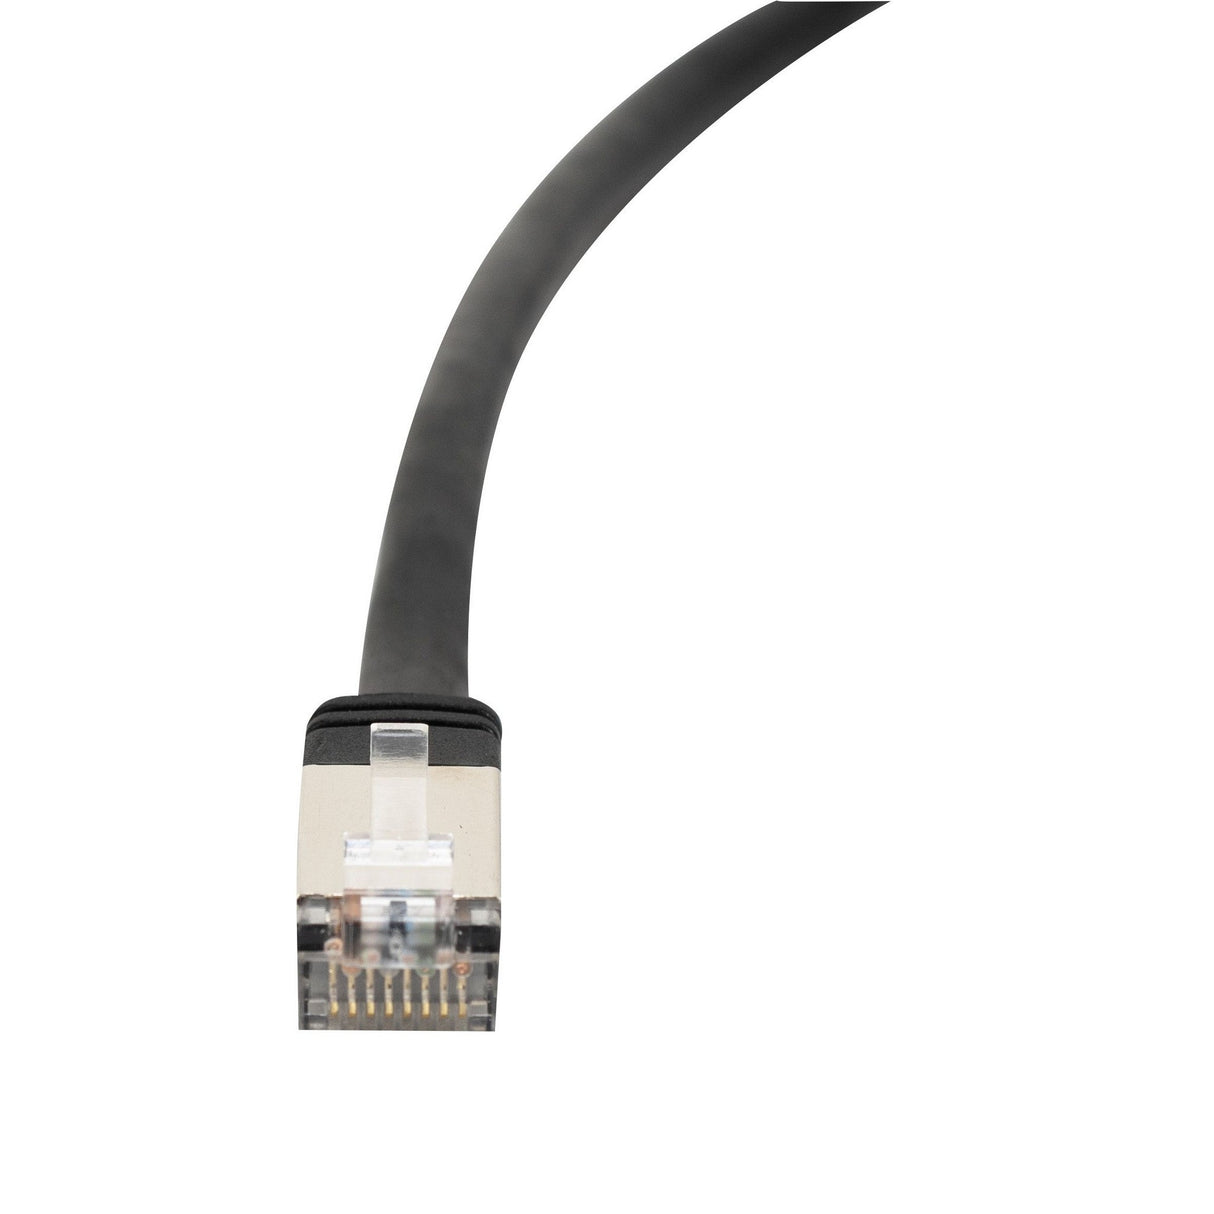 ADJ WMSHDC Horizontal Data Cable for WMS